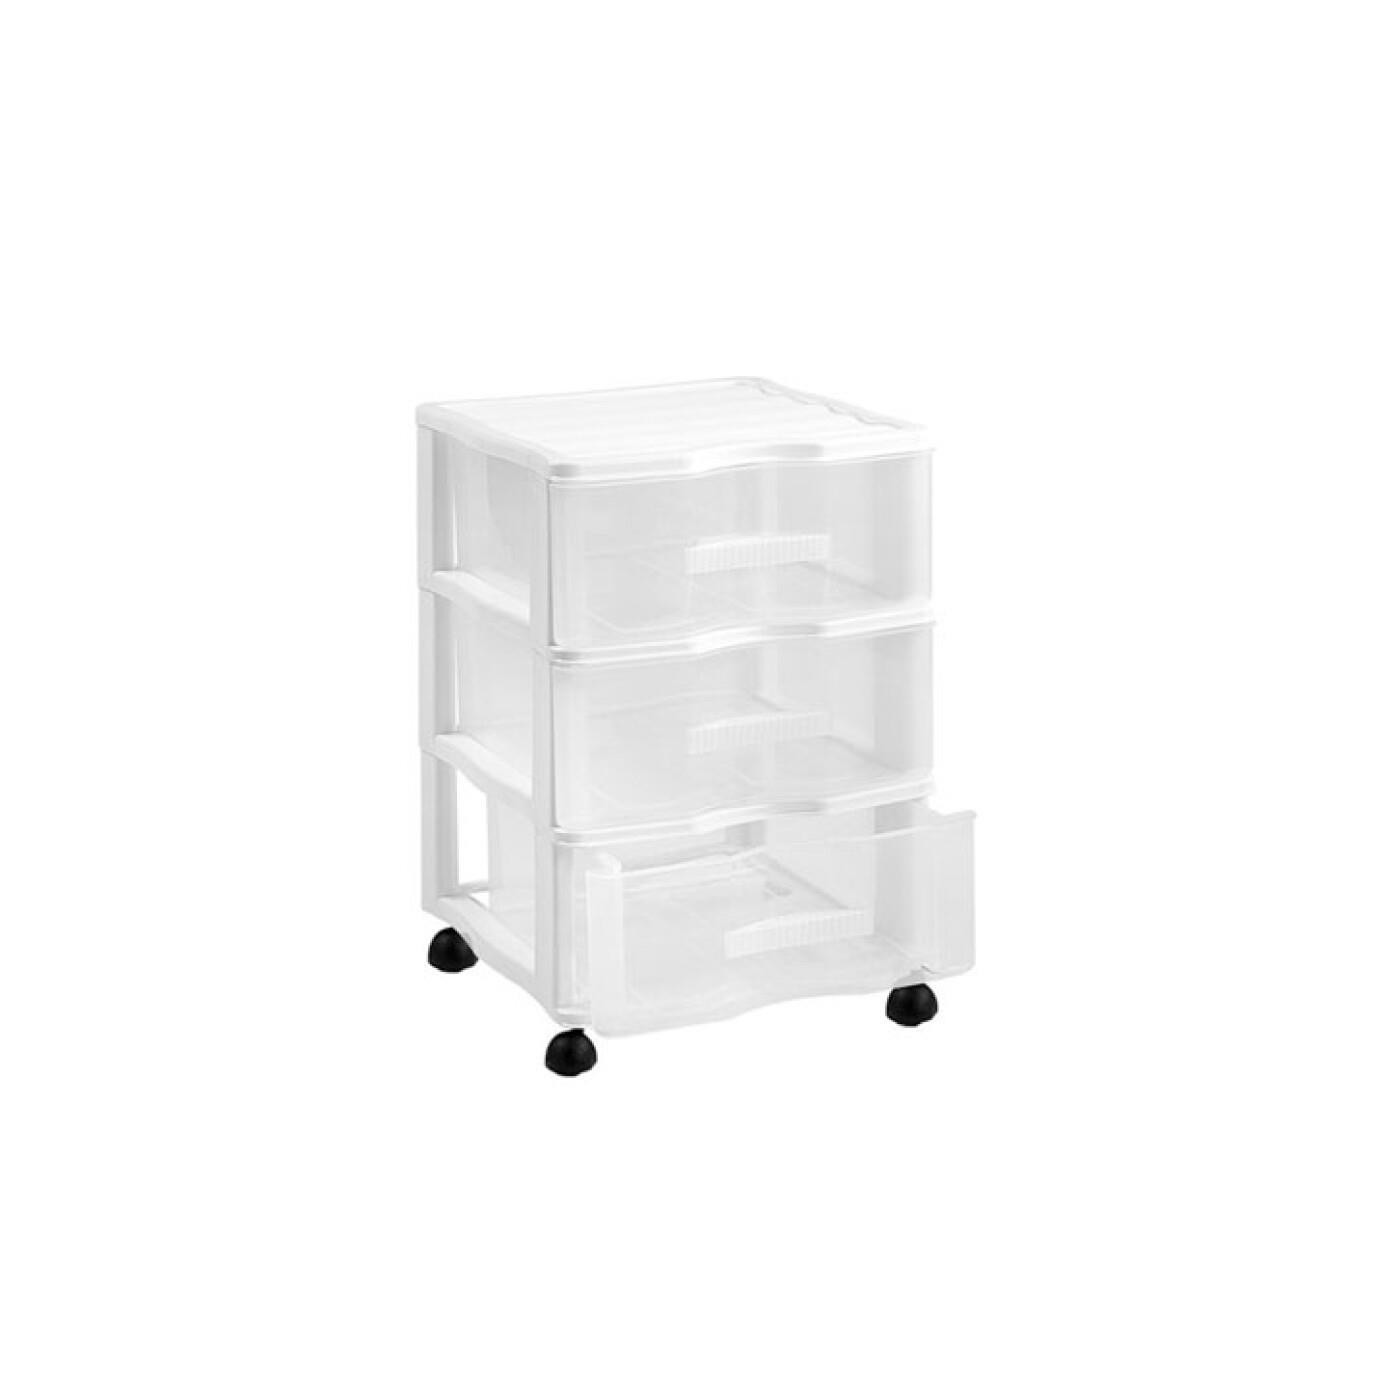 Tradineur - Cajonera estrecha modelo Támesis de plástico, 2 cajones  transparentes, torre de almacenaje, oficina, hogar (Blanco